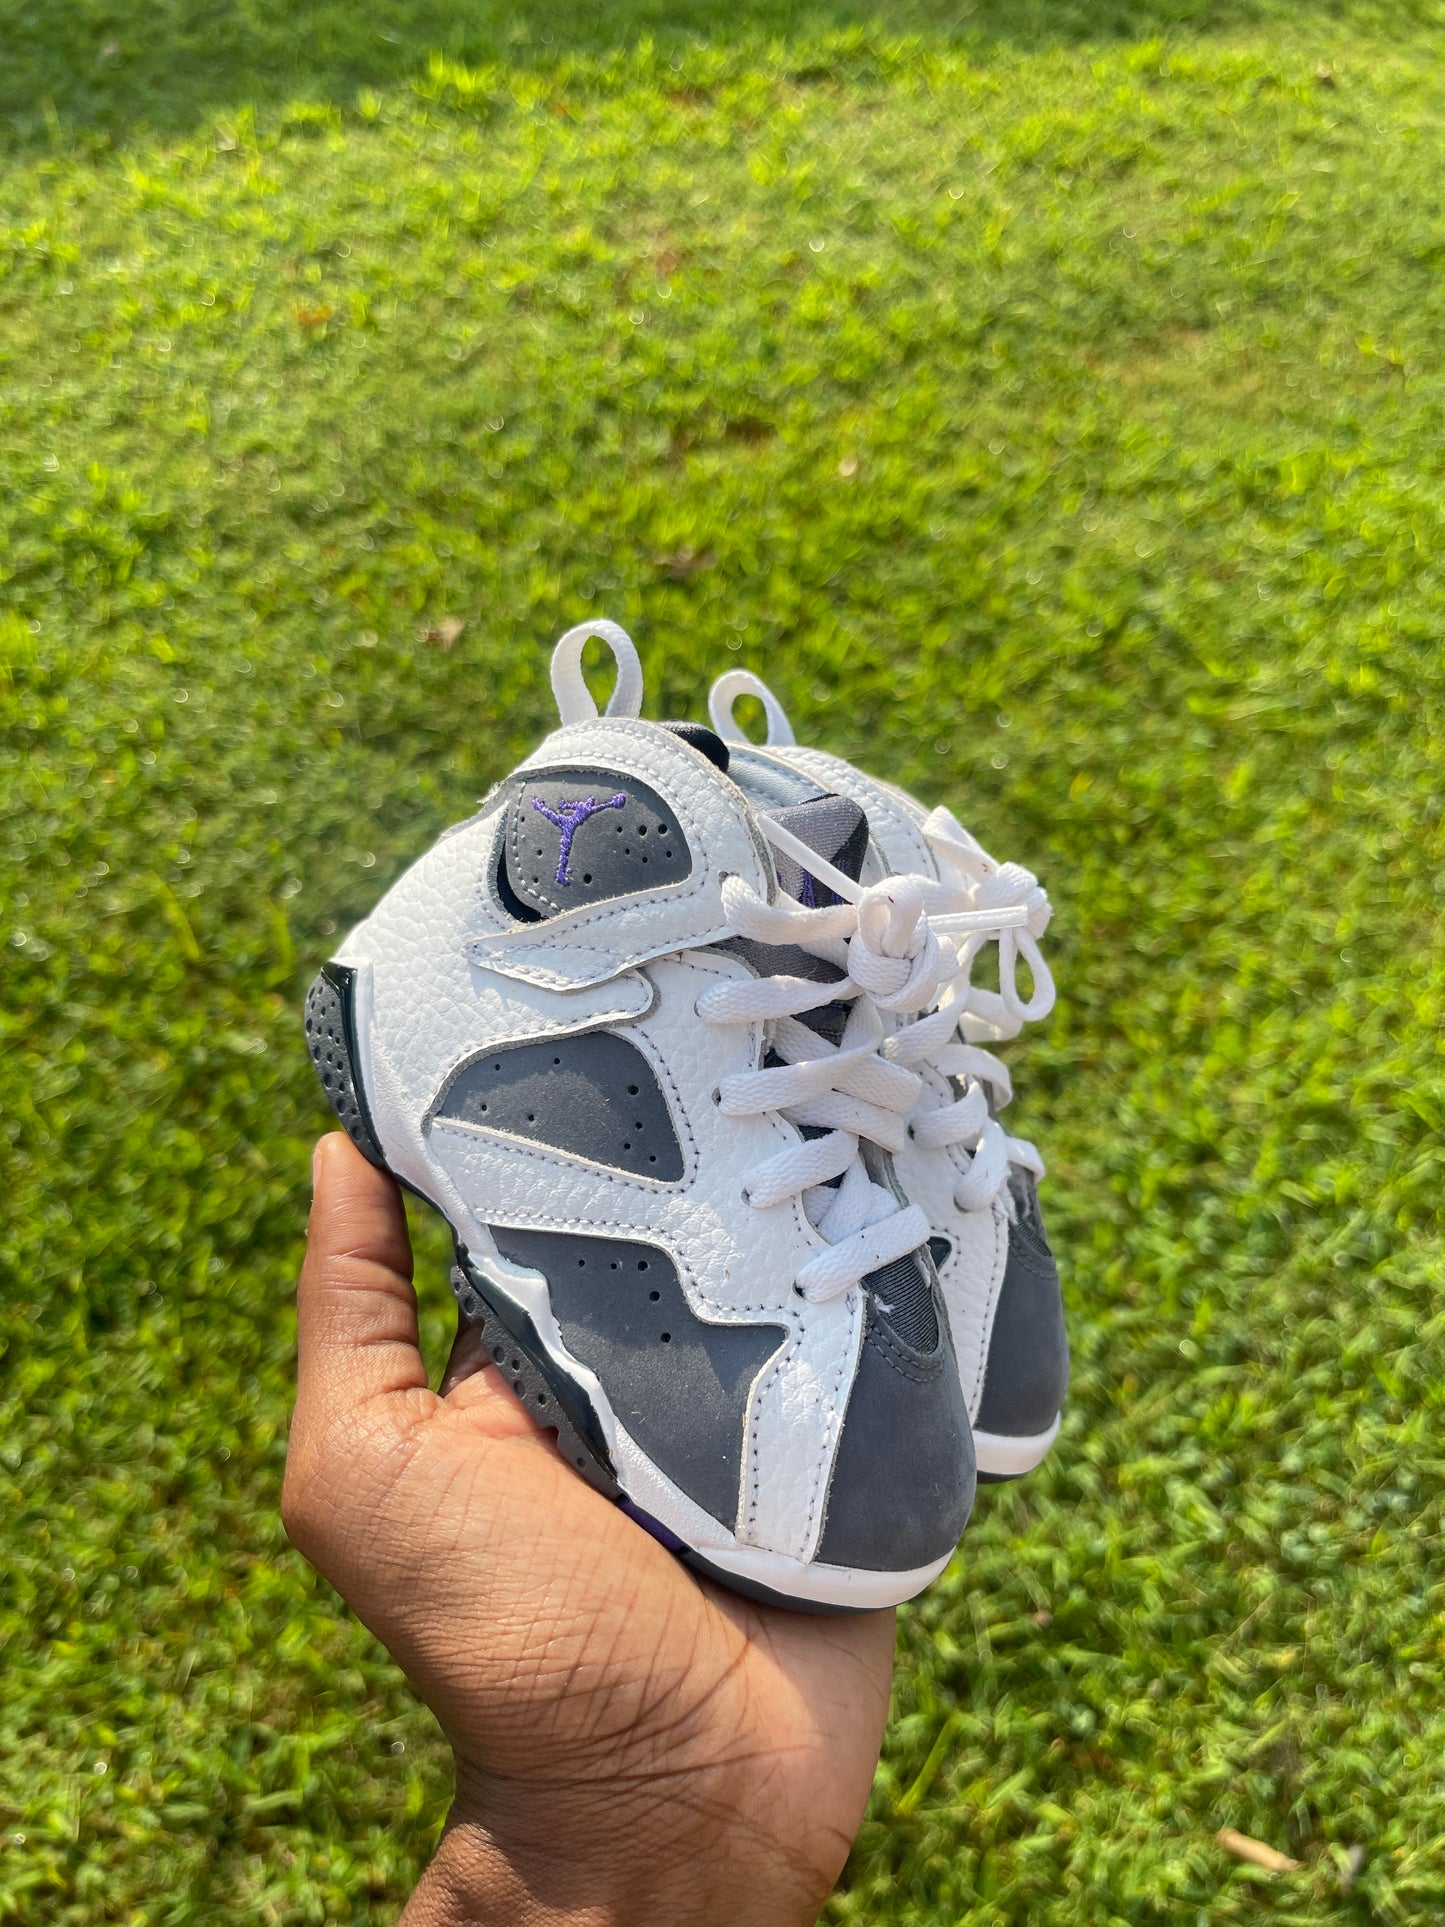 Air Jordan gray white purple toddler sz 6c